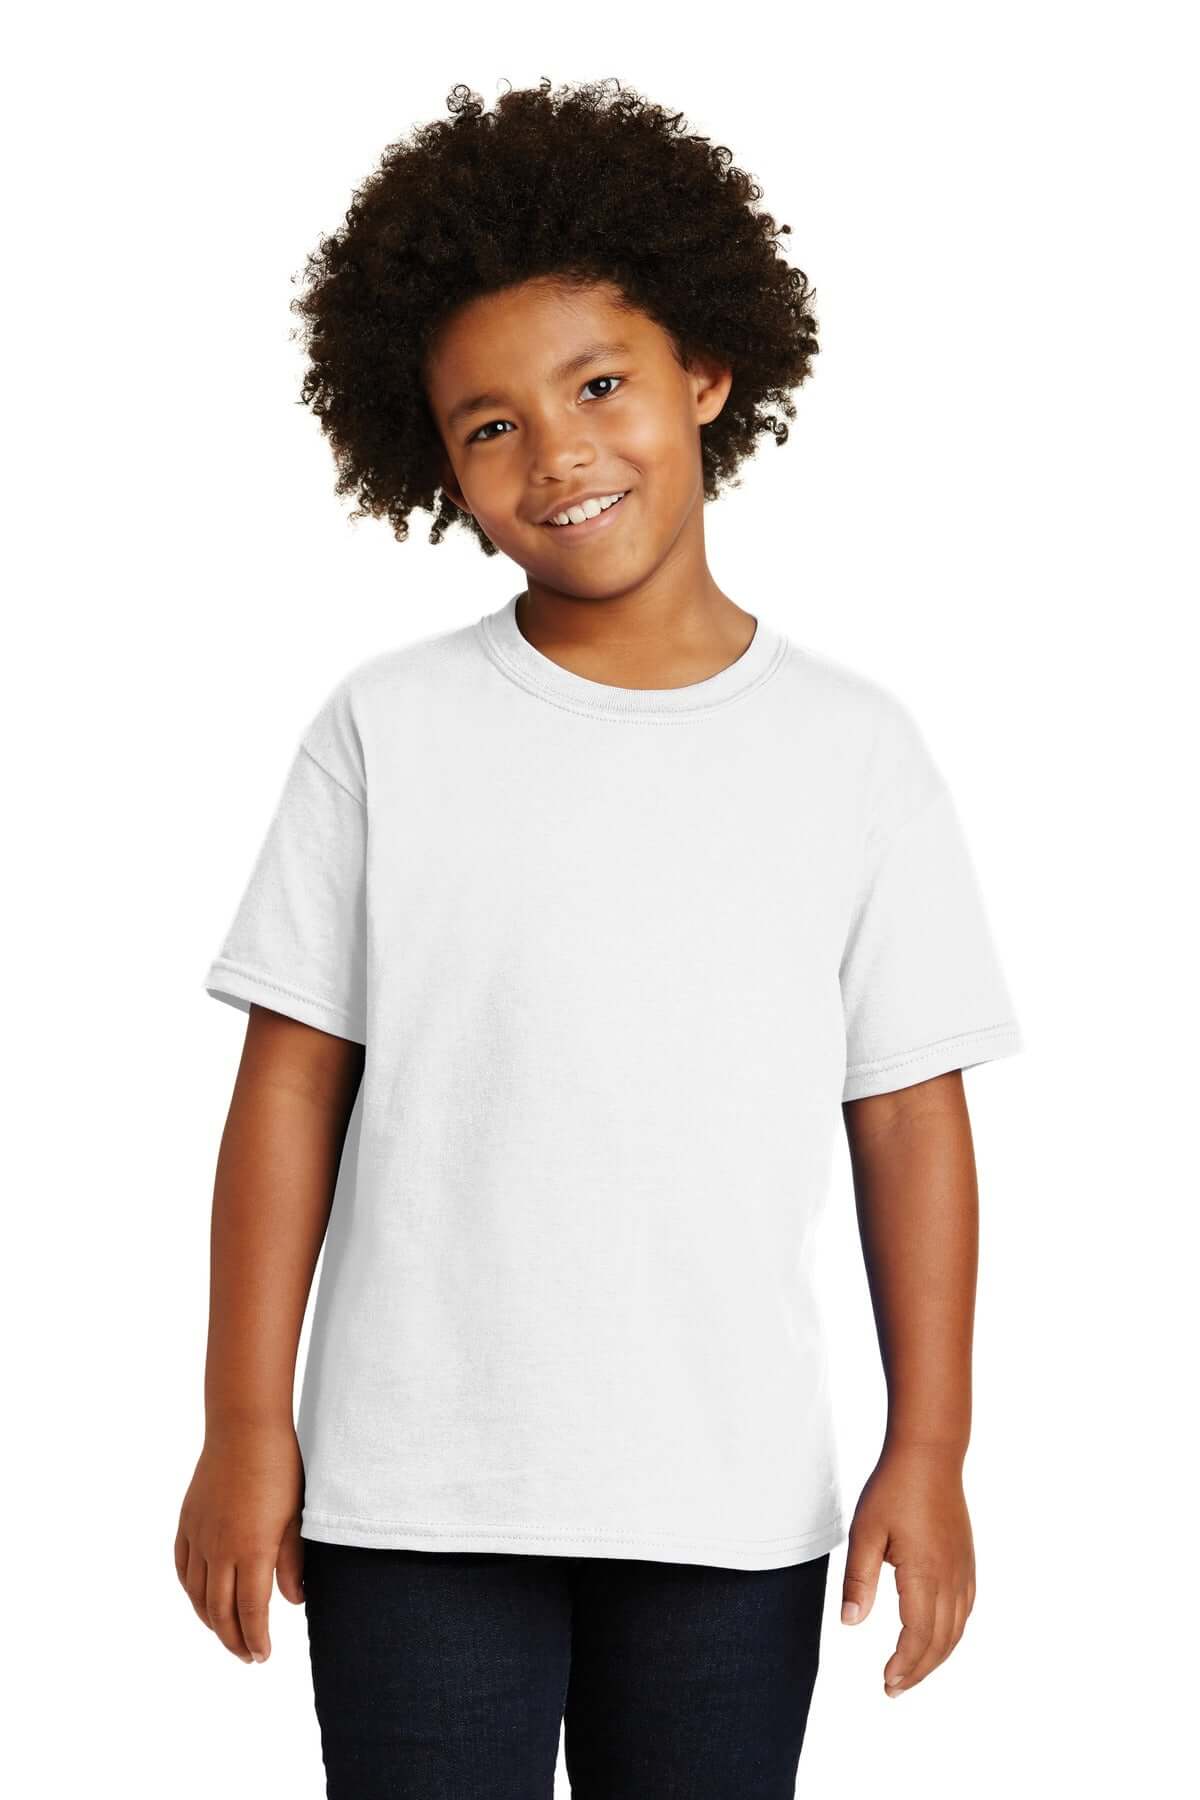 Youth Cotton 5000B Kids T-Shirt